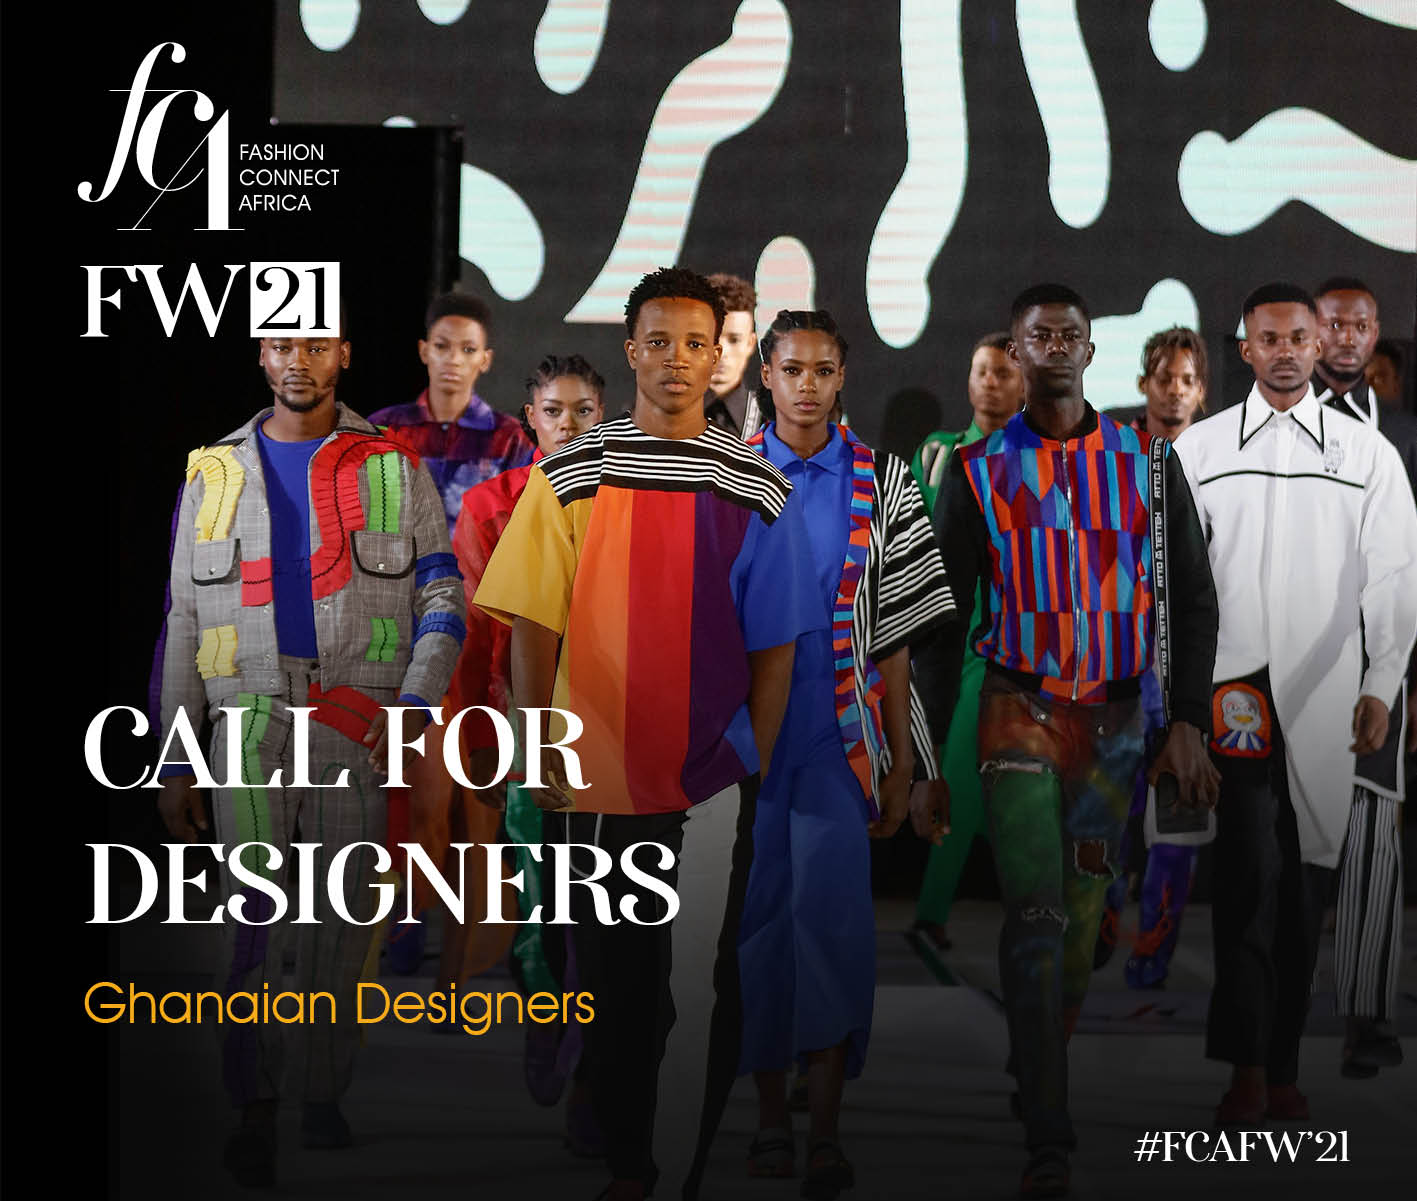 FCA Call for Ghanaian Designers